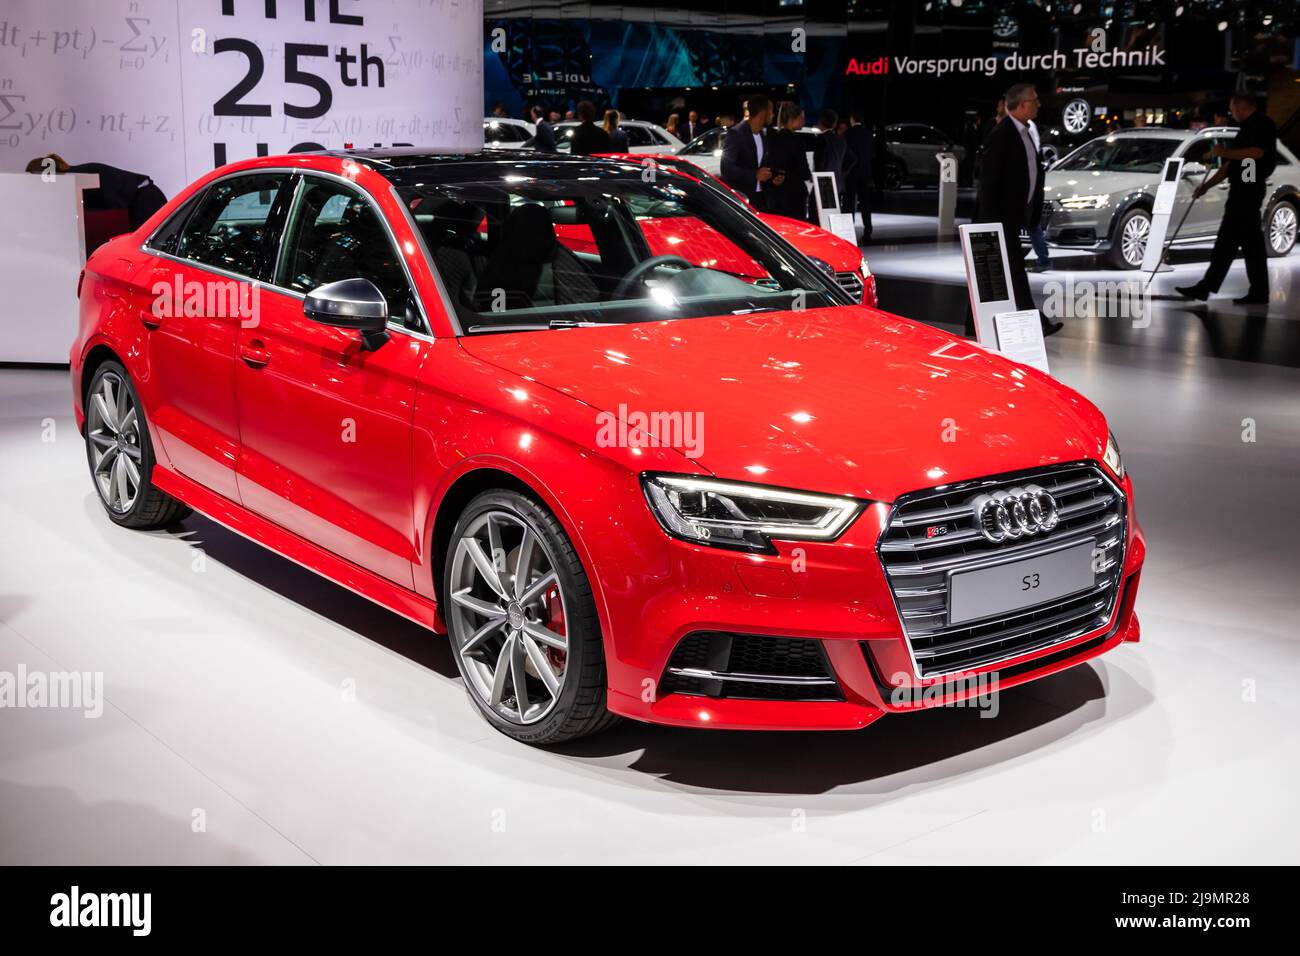 Audi s3 -Fotos und -Bildmaterial in hoher Auflösung – Alamy